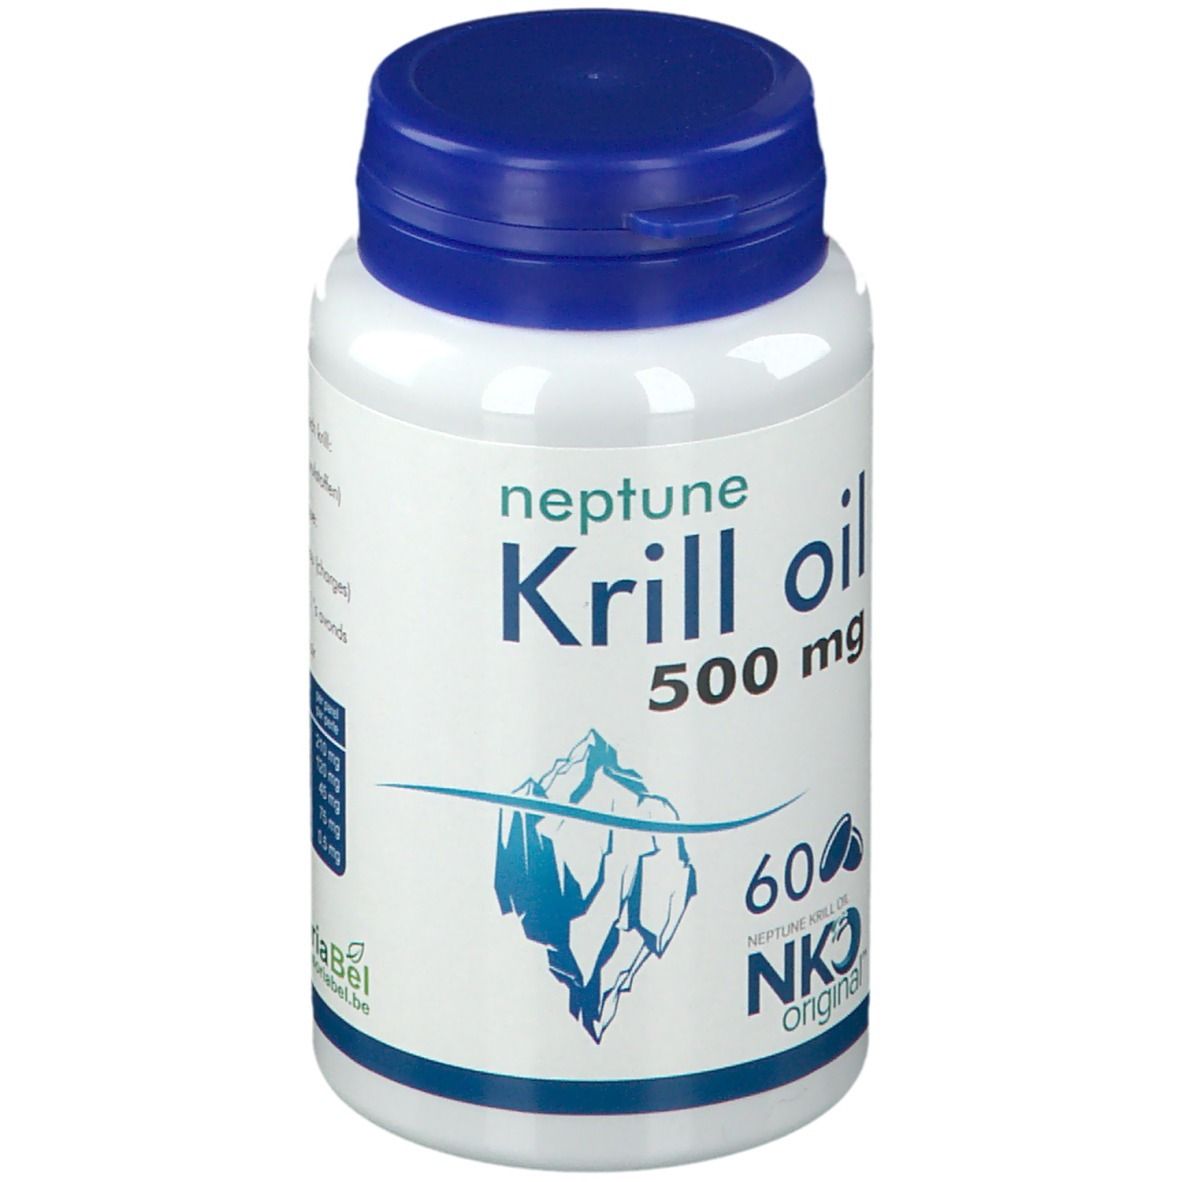 SoriaBel Neptune Krill Oil 500 mg